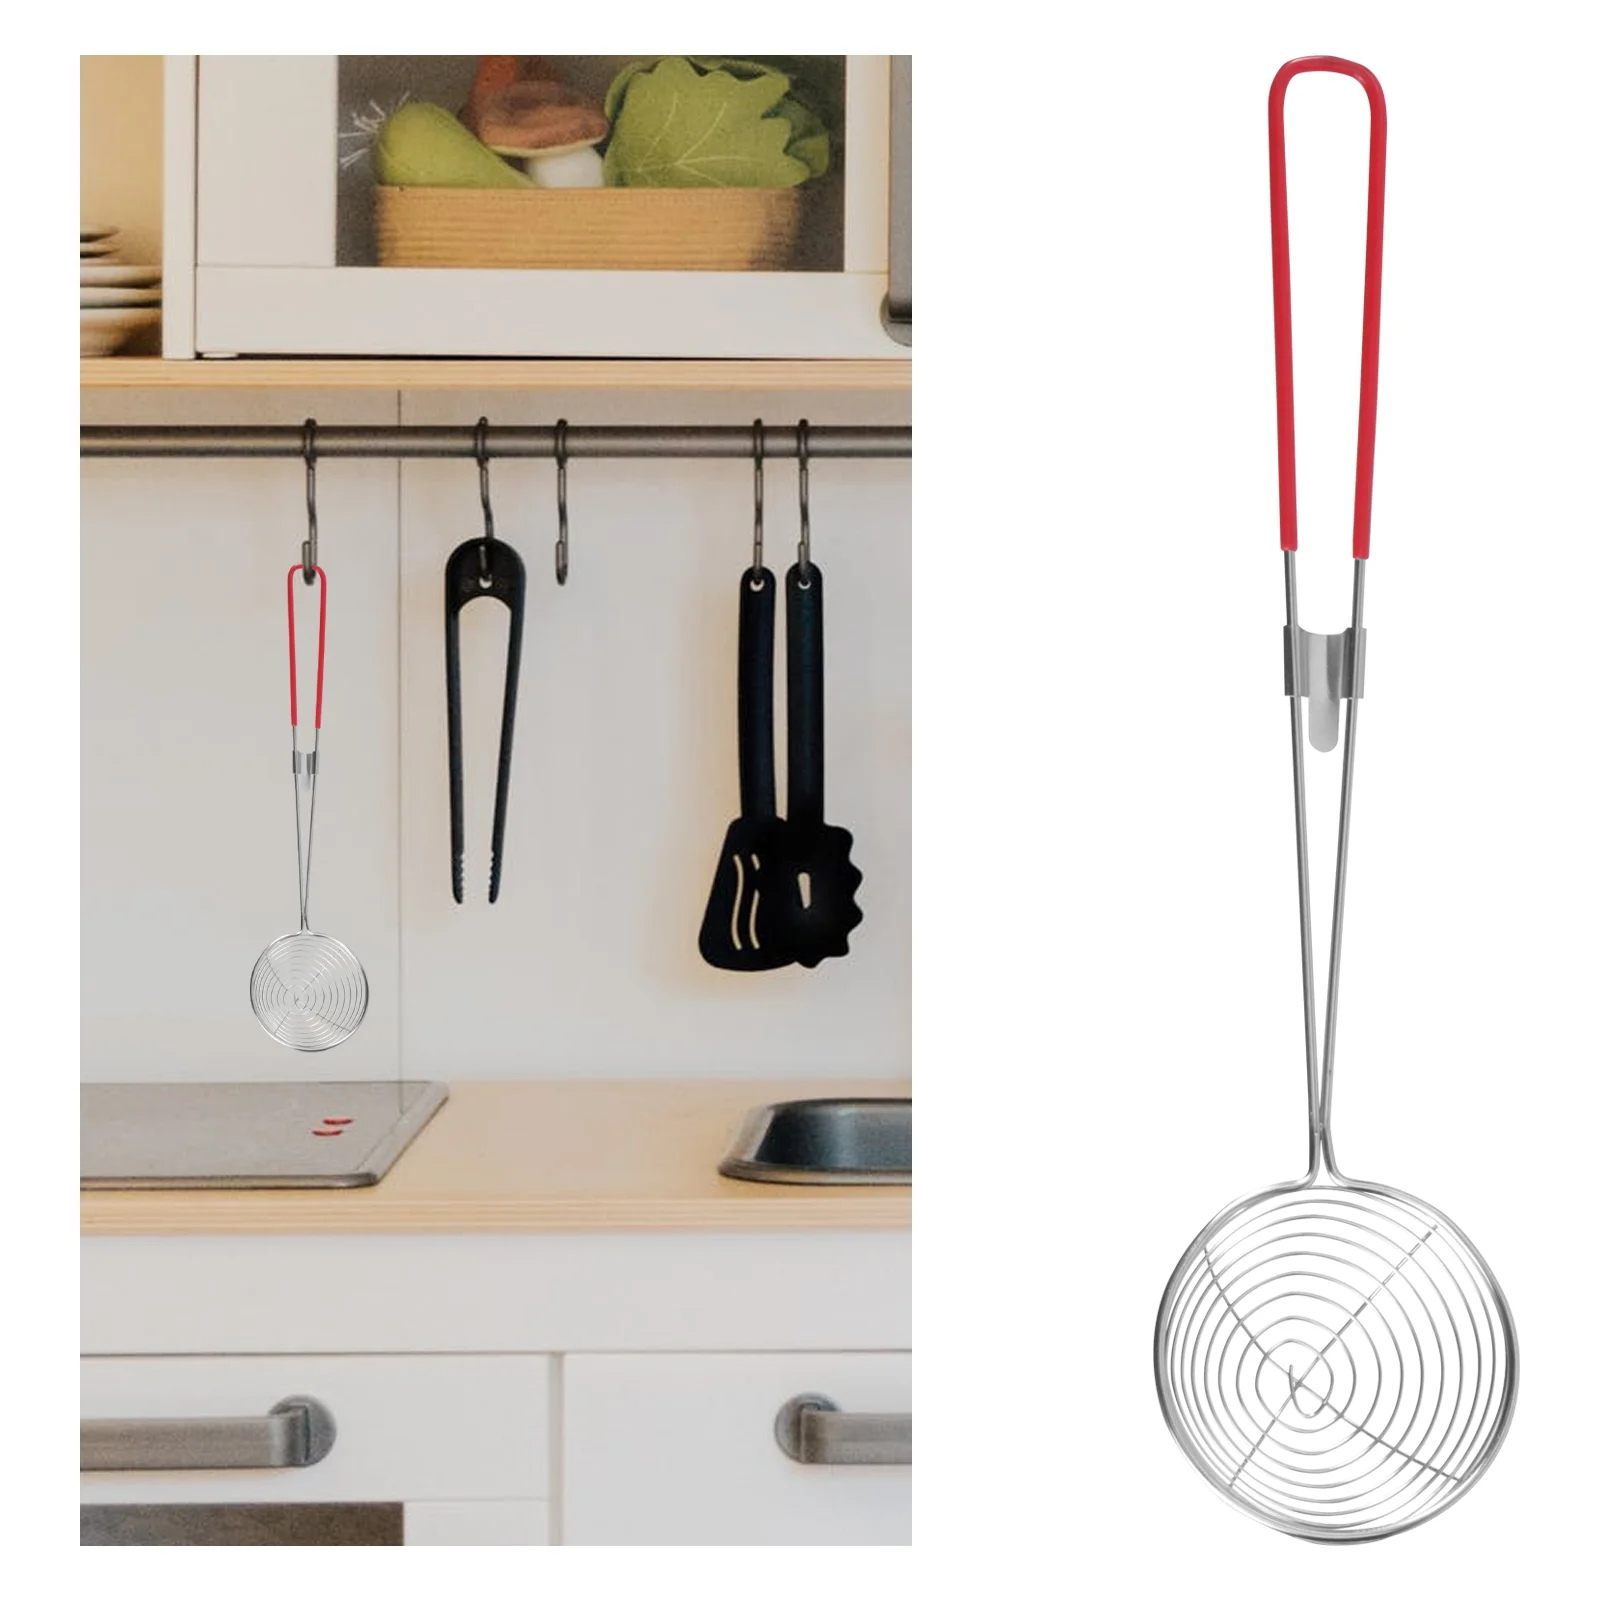 

6PCS Stainless Steel Bubble Tea Colander Skimmer Long Handle Cooking Ladle Strainer Kitchen Gadget